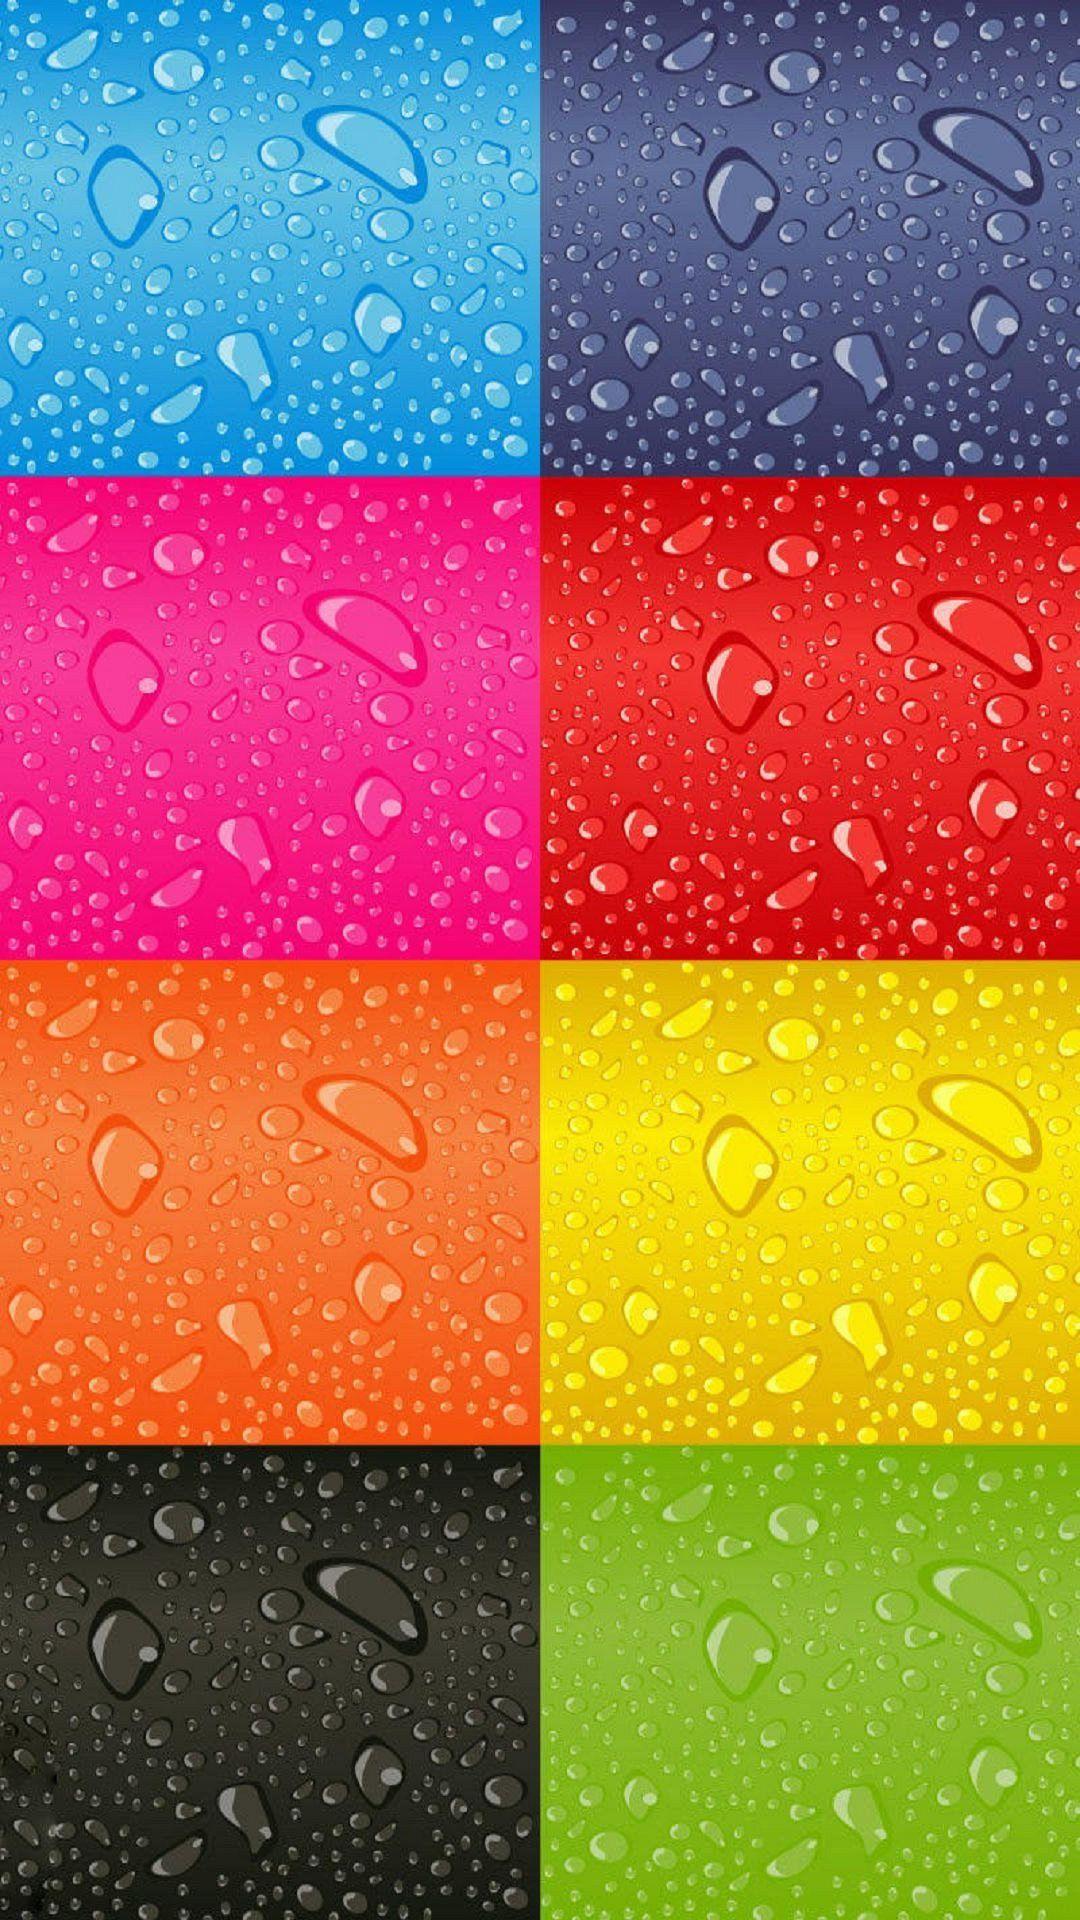 Z Wallpaper Full HD 1080 X 1920 Smartphone Screen Division Colorful